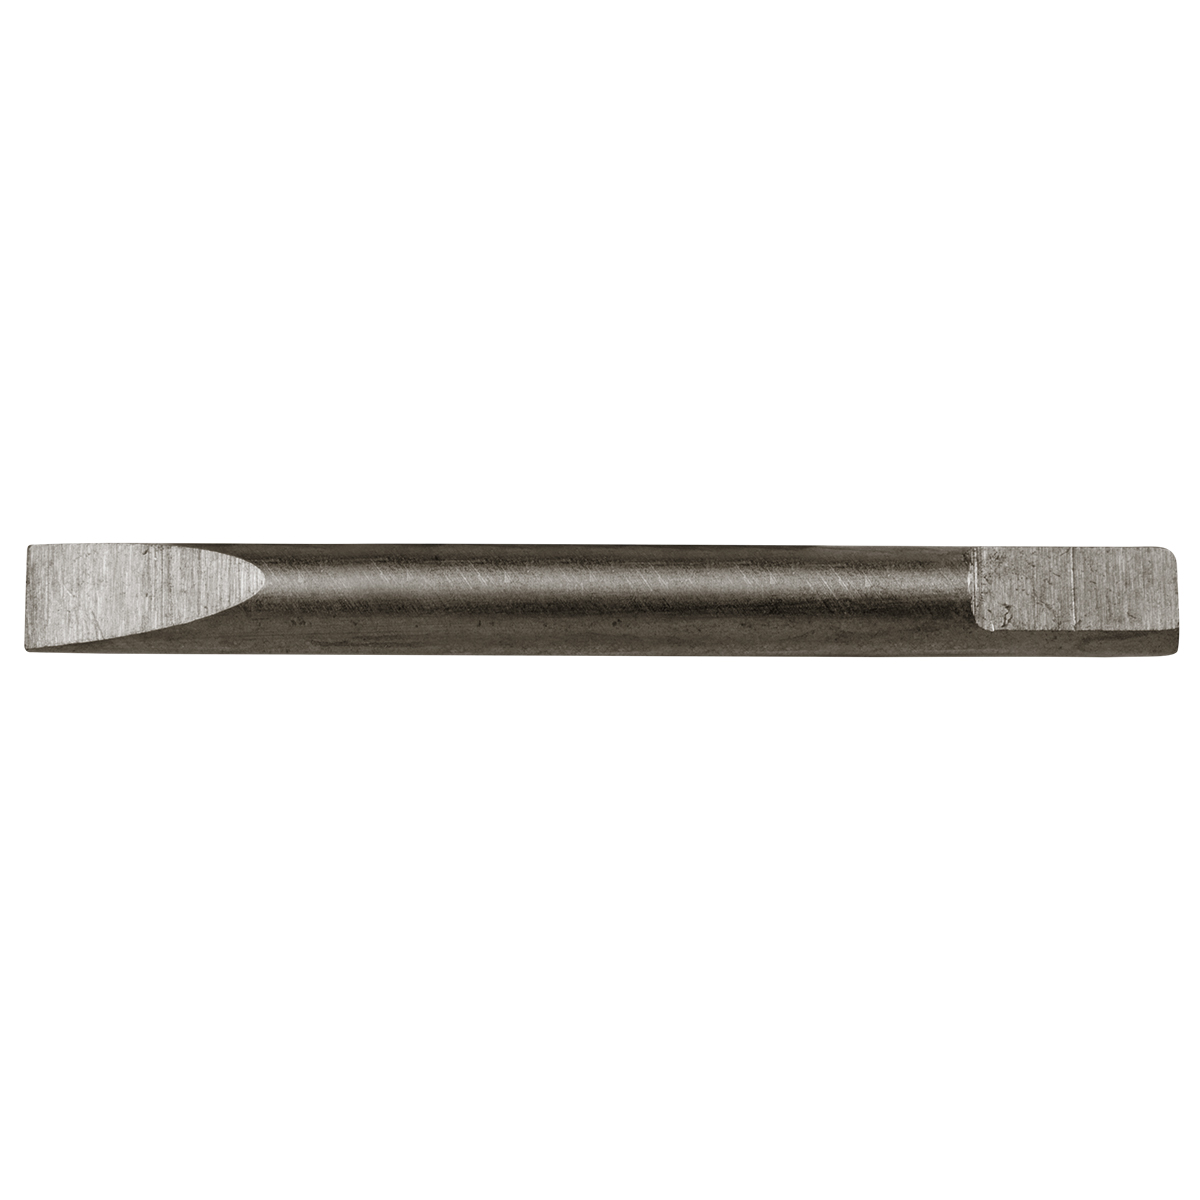 2 Blades for Ergo screwdriver, slot, 2,50 mm, standard taper, cyan, stainless steel,